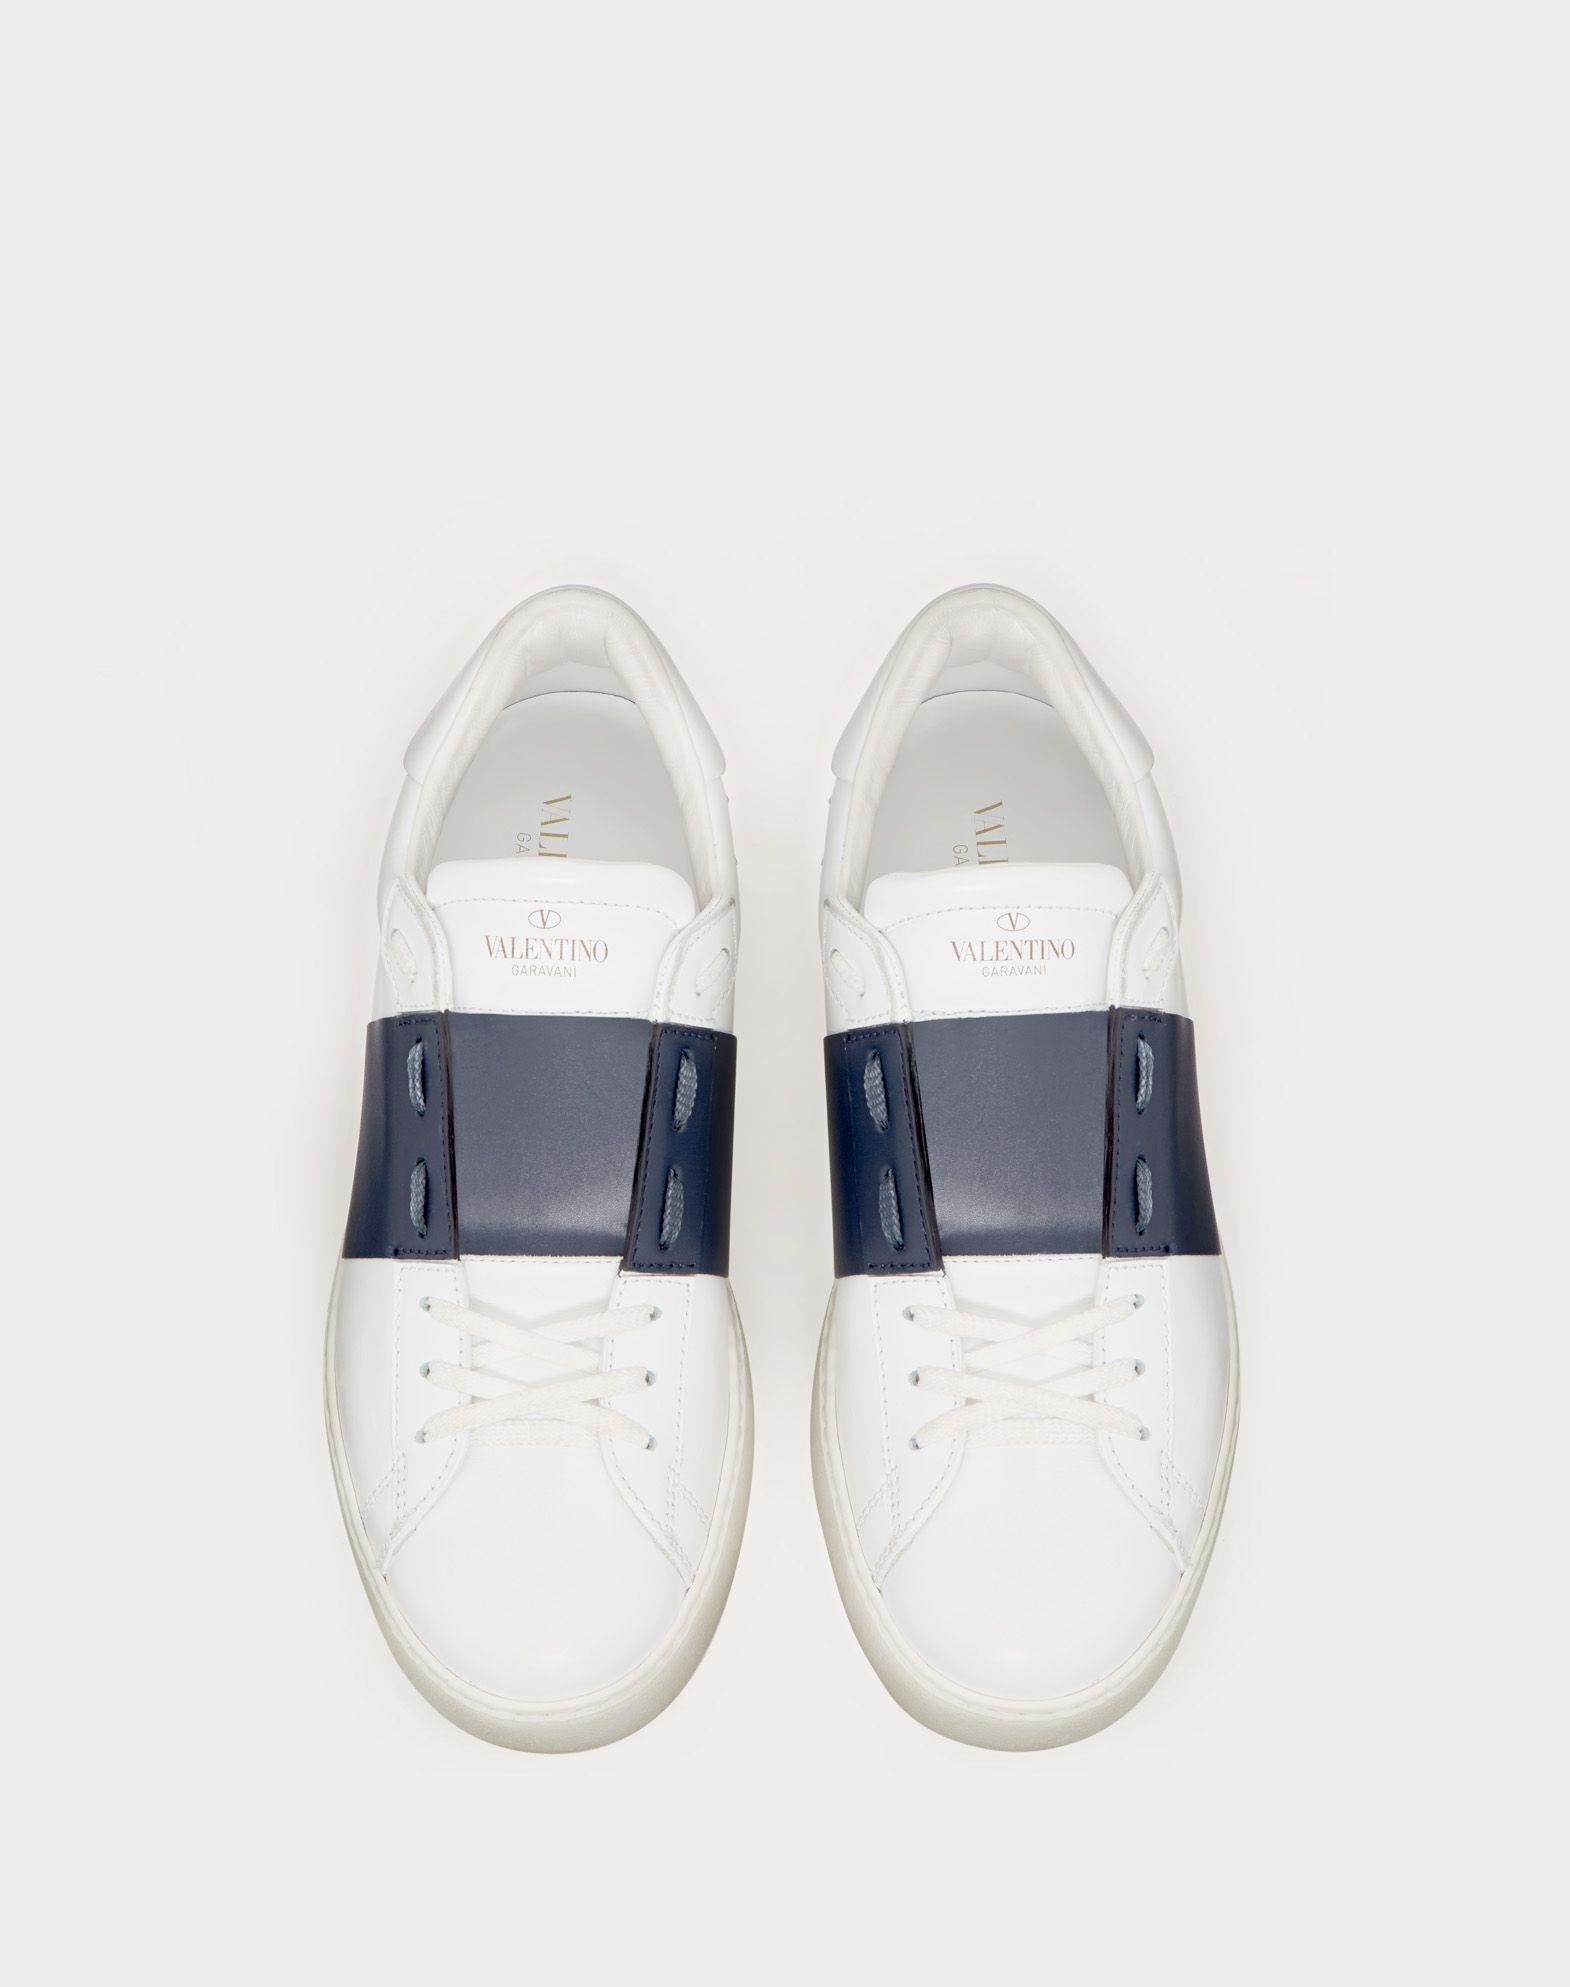 Valentino Garavani Contrast-stripe Leather Sneakers in White/Marine (Blue)  for Men - Lyst